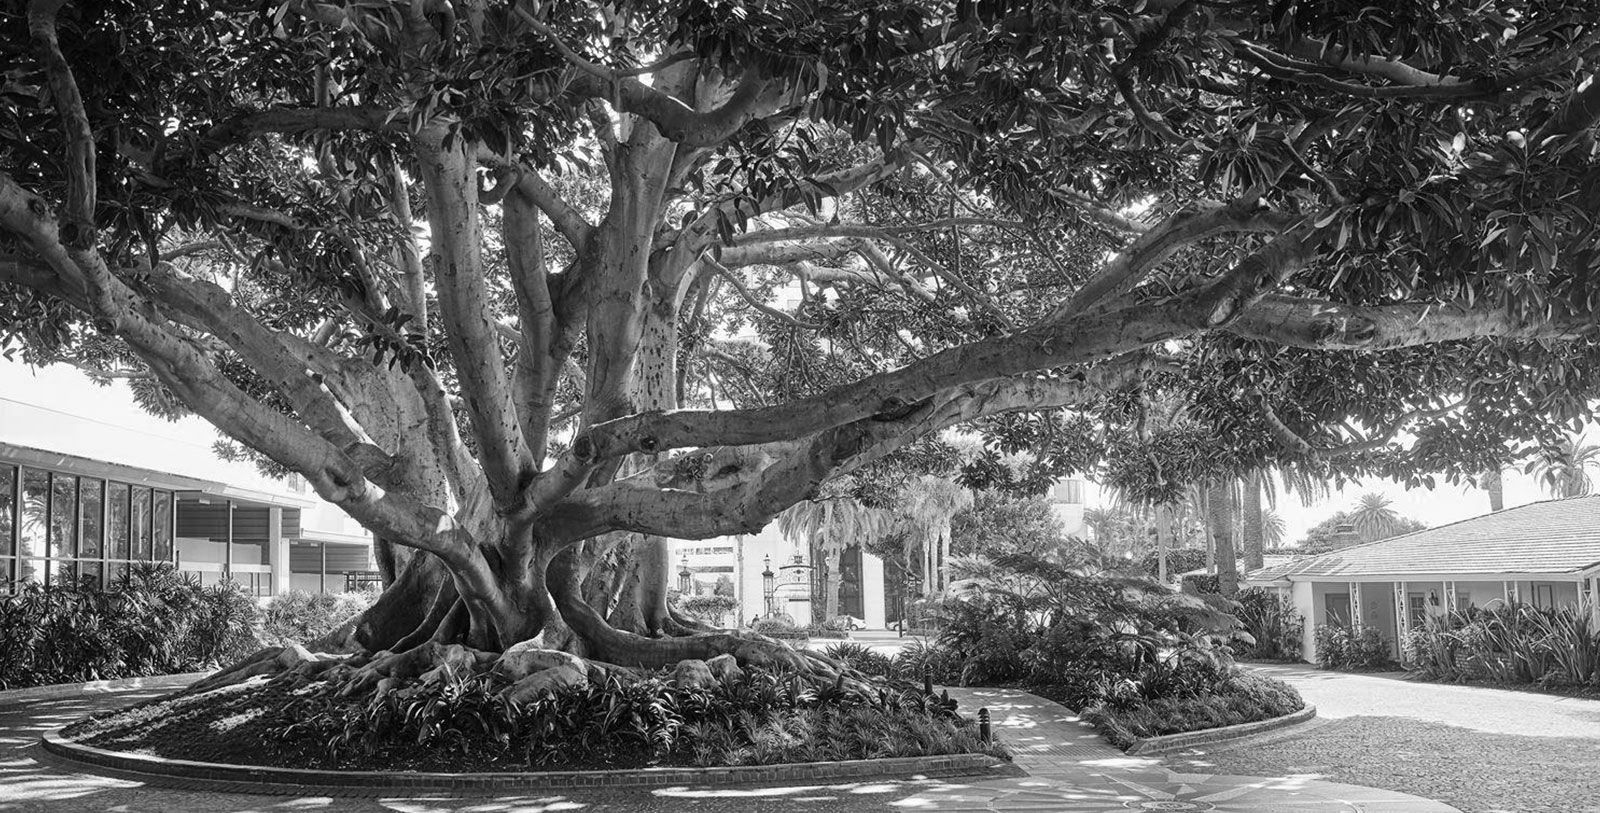 Black and White Image of Moreton Bay Fig Tree, Fairmont Miramar Hotel in Santa Monica, California